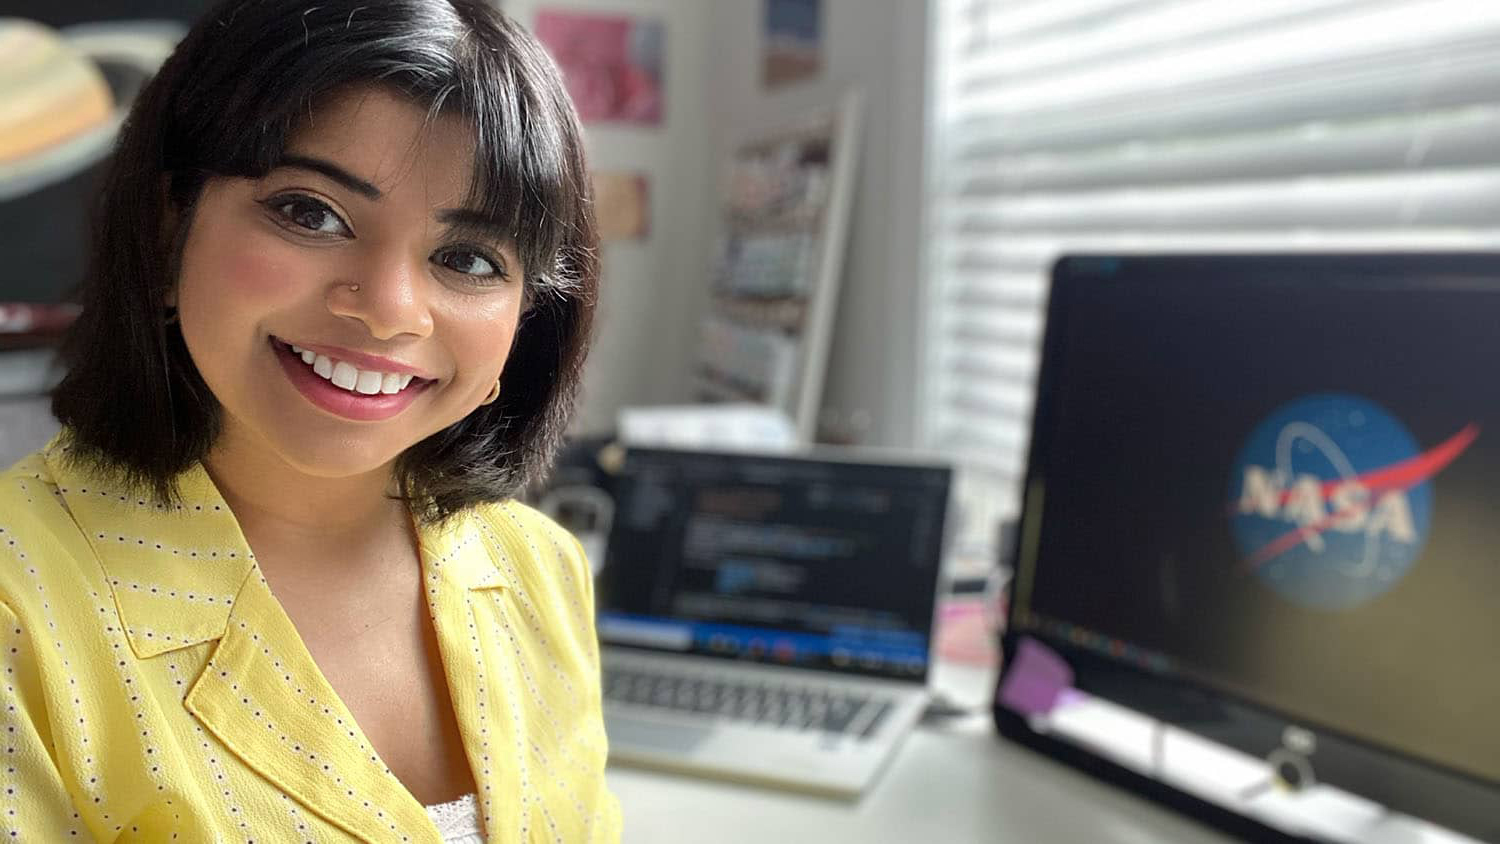 Shilpa Kancharla sitting at desk in front of computer screen displaying the NASA logo.